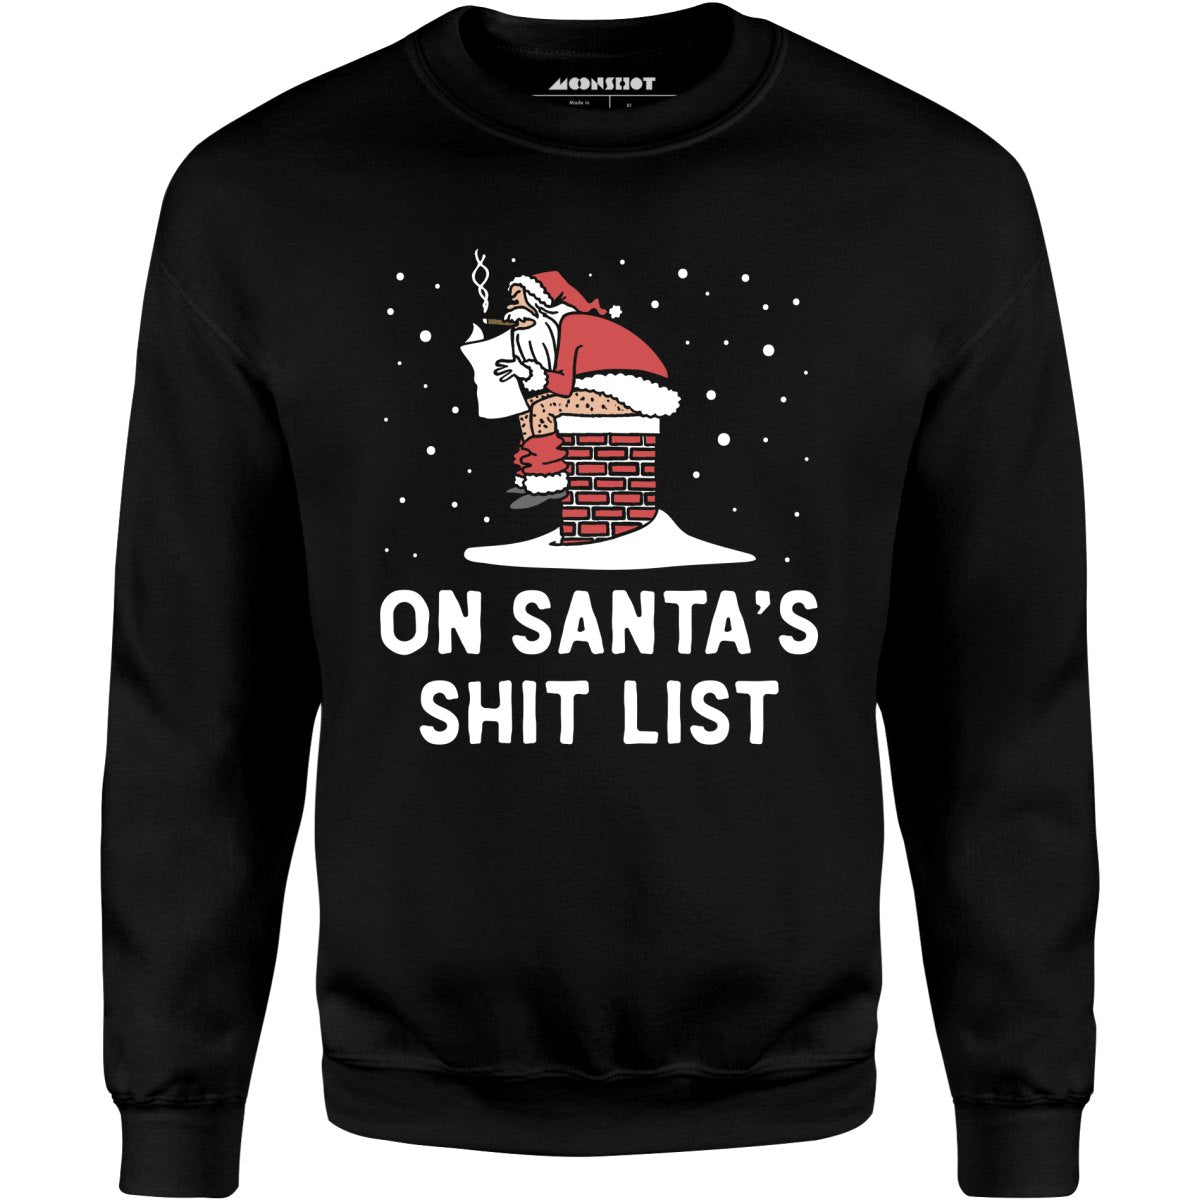 On Santa's Shit List - Unisex Sweatshirt